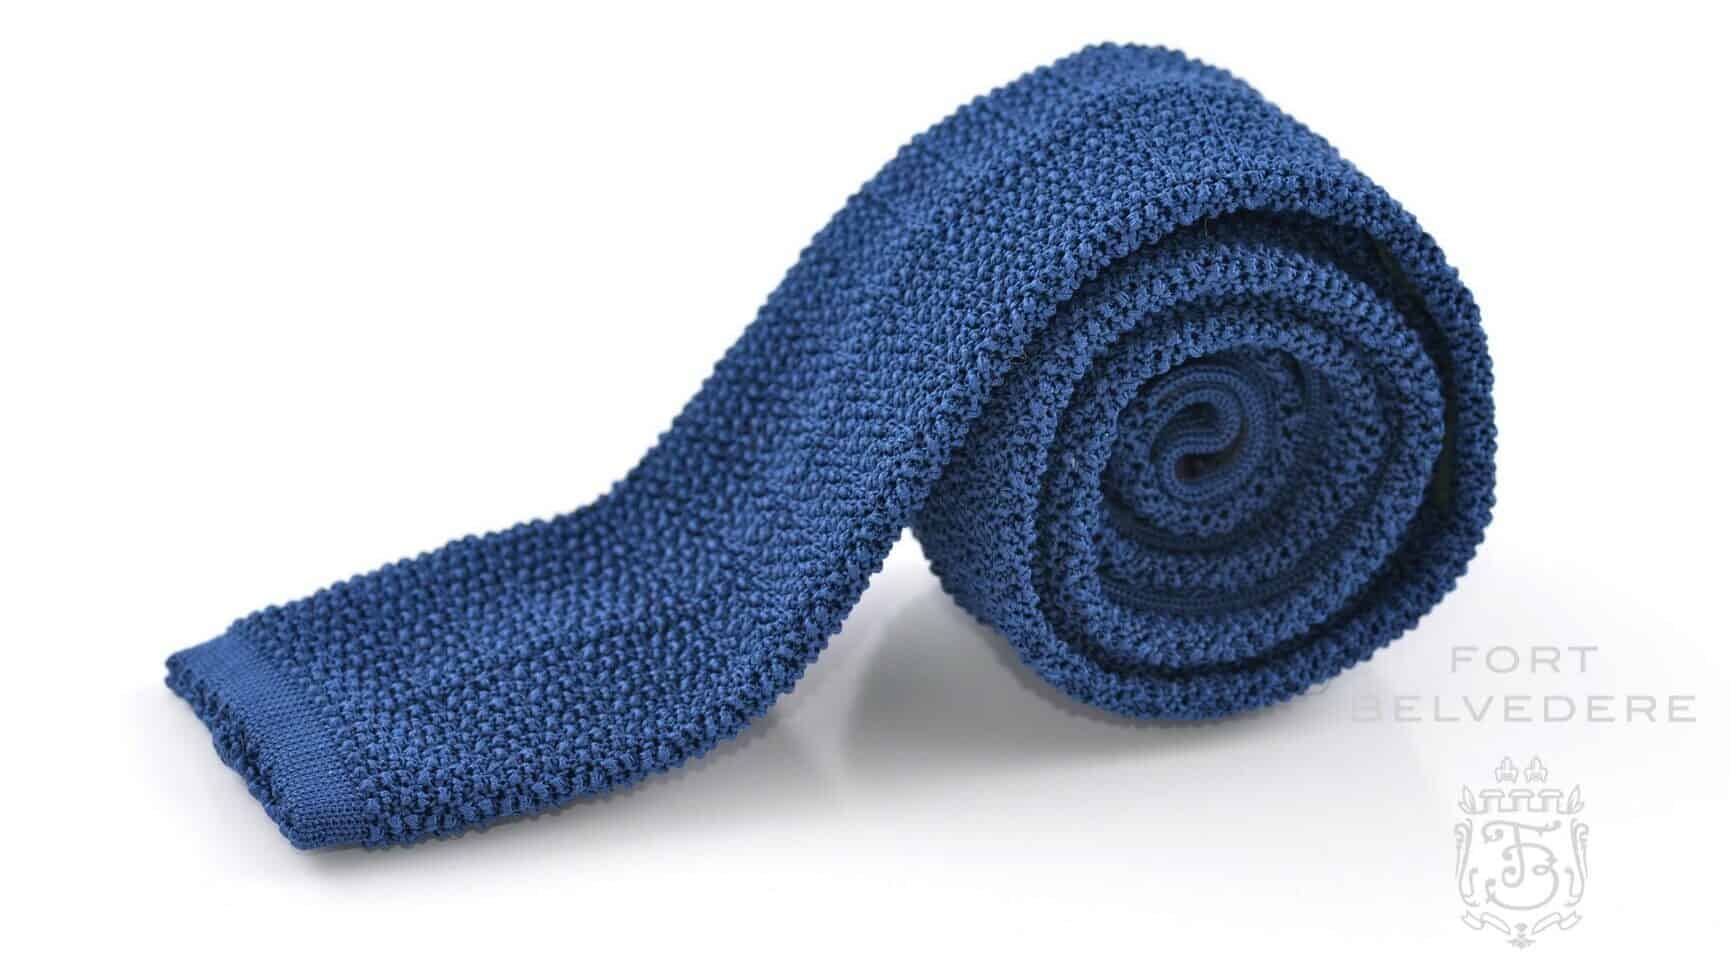 Knit Tie in Solid Prussian Blue Silk - Fort Belvedere